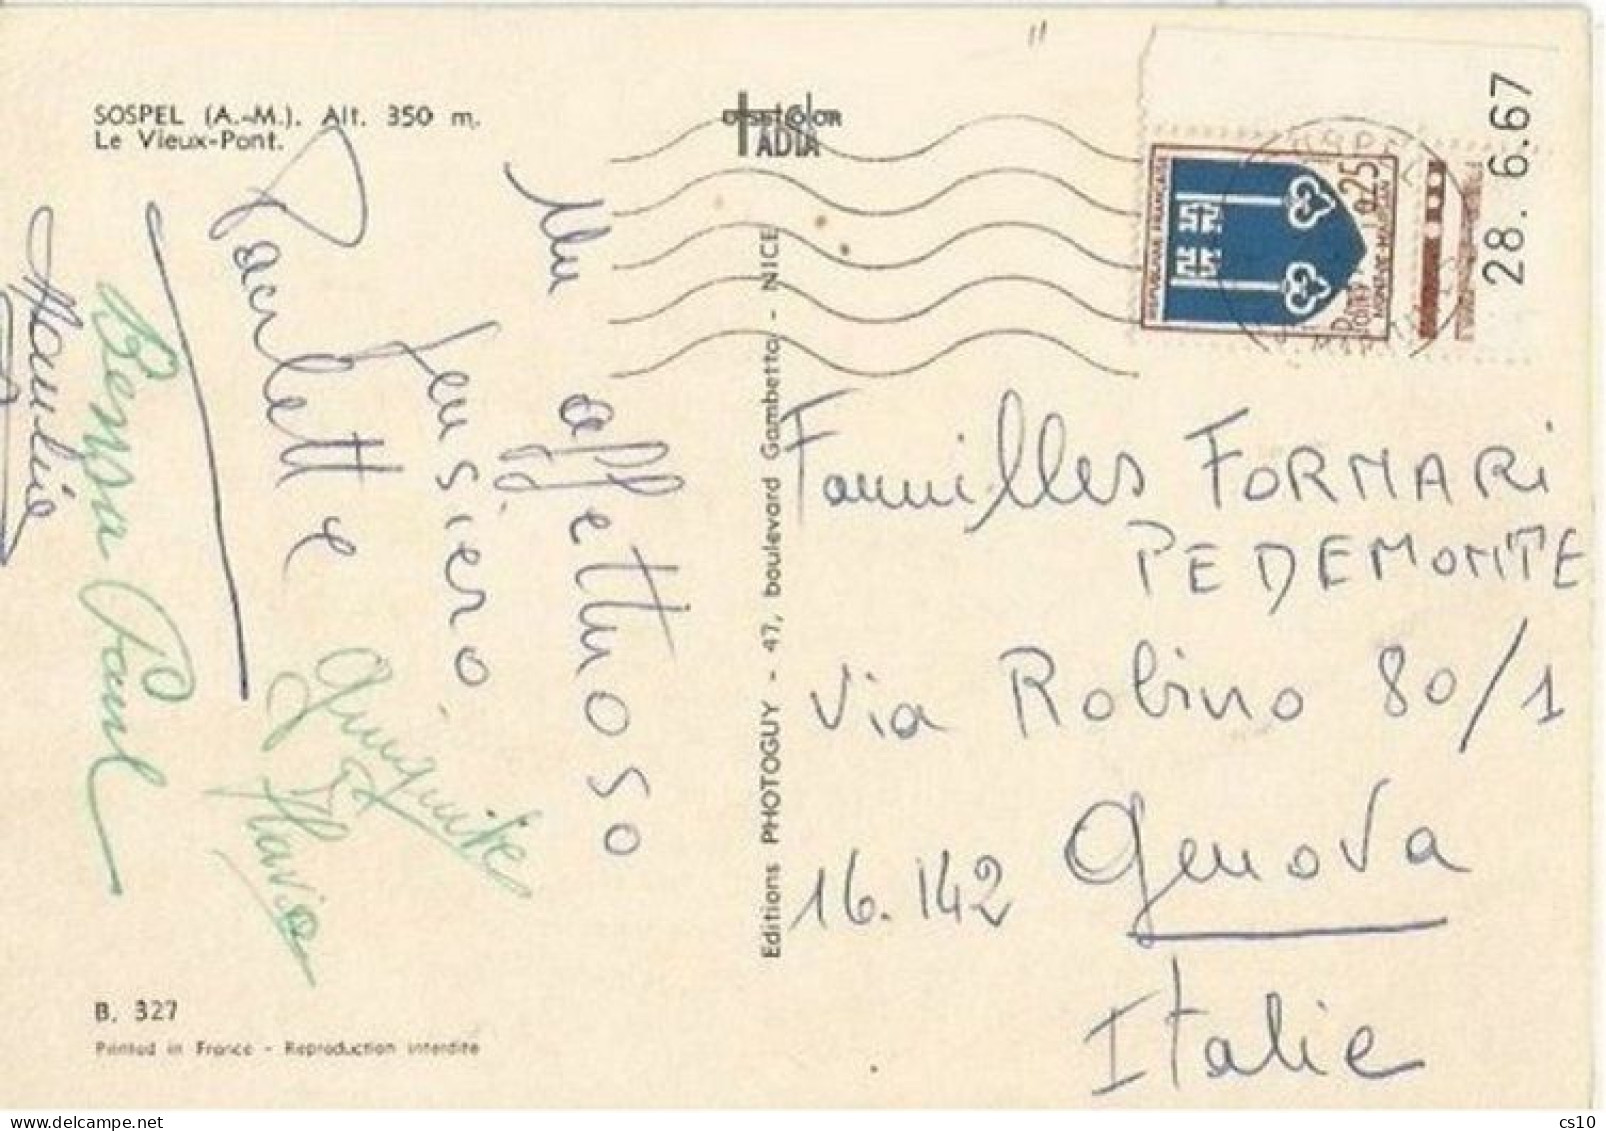 France Ecusson Marsan F0,25 COIN DATE' 28.6.67 Used Pcard Sospel 25mar68 X Italy - Briefe U. Dokumente